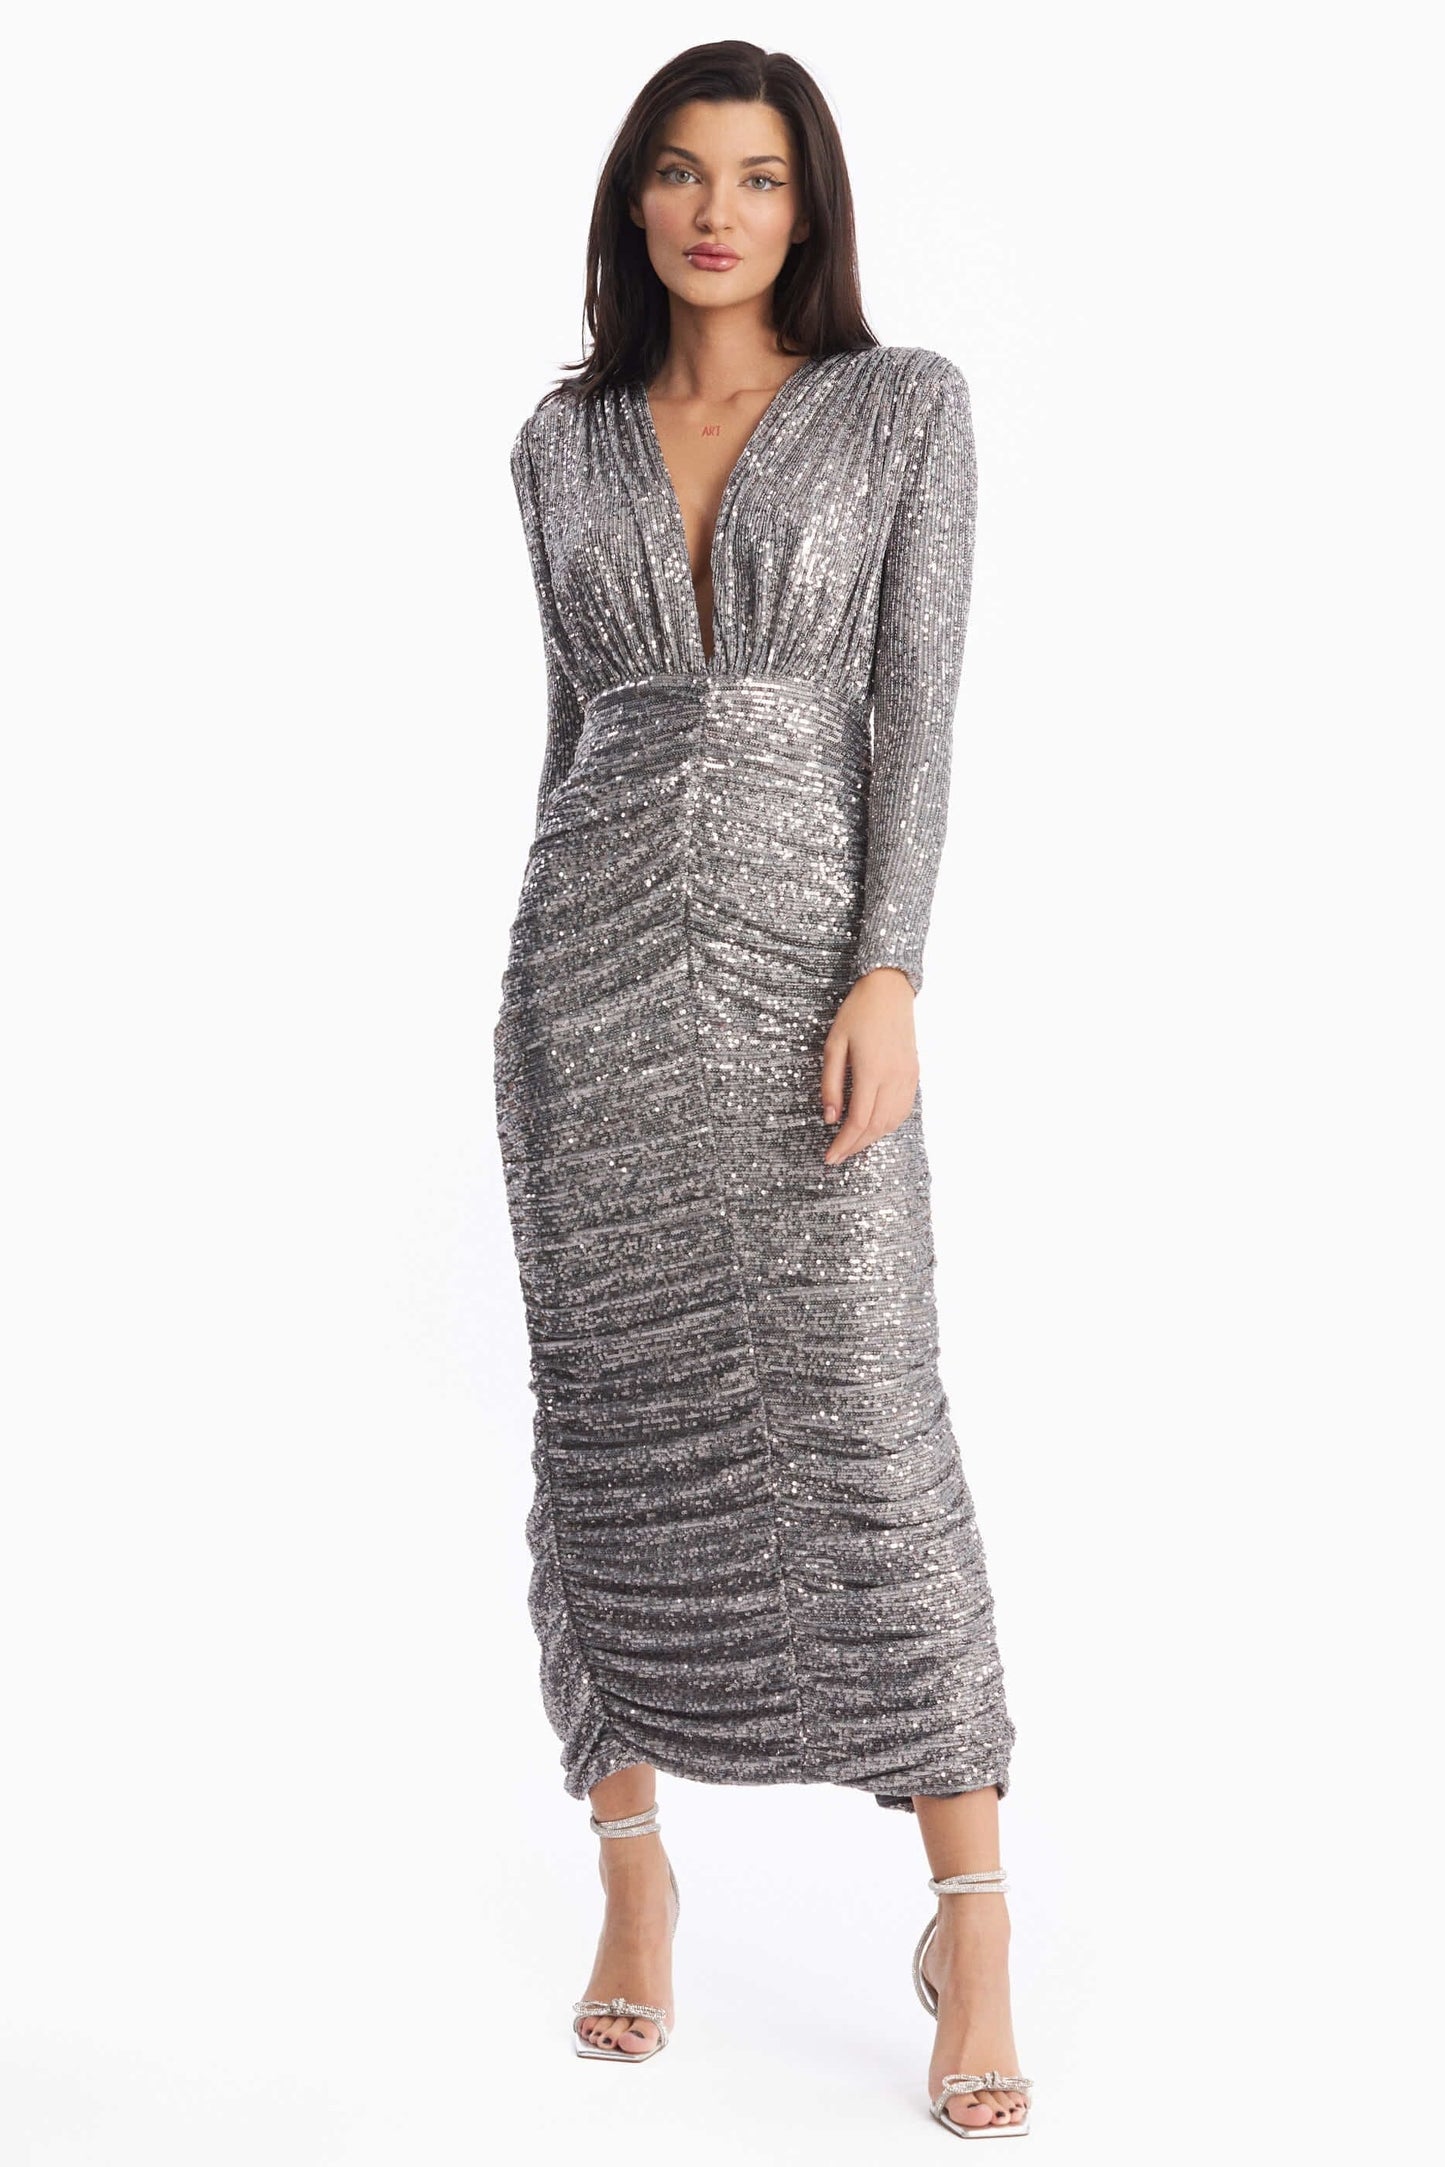 Închiriere rochie Outfitflows - paiete argintii